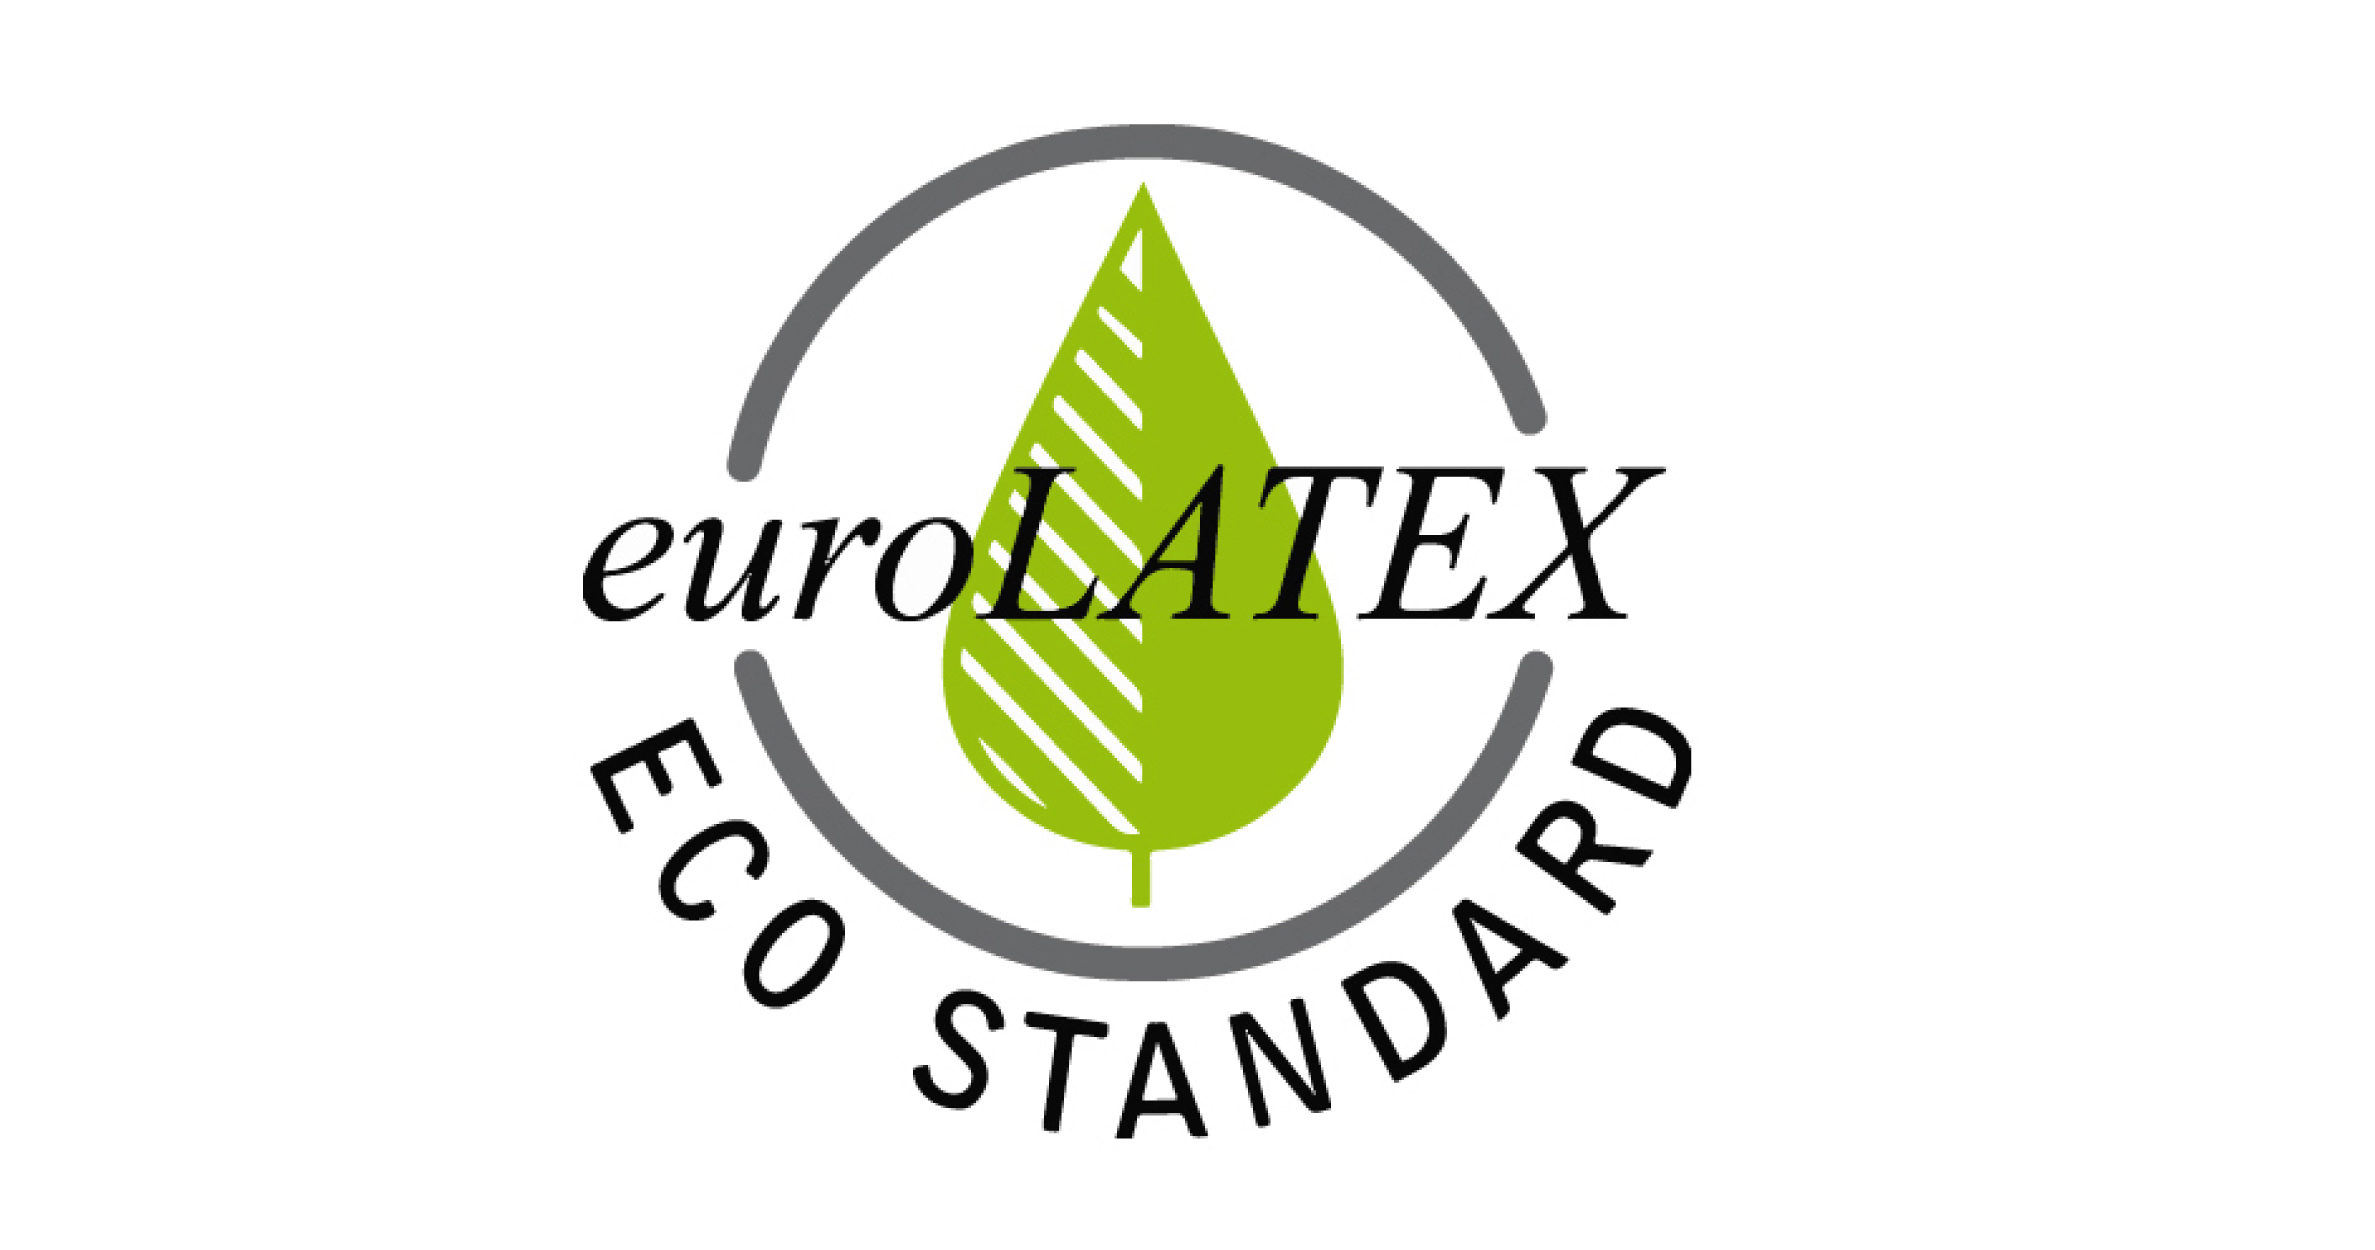 eurolatex latexbio